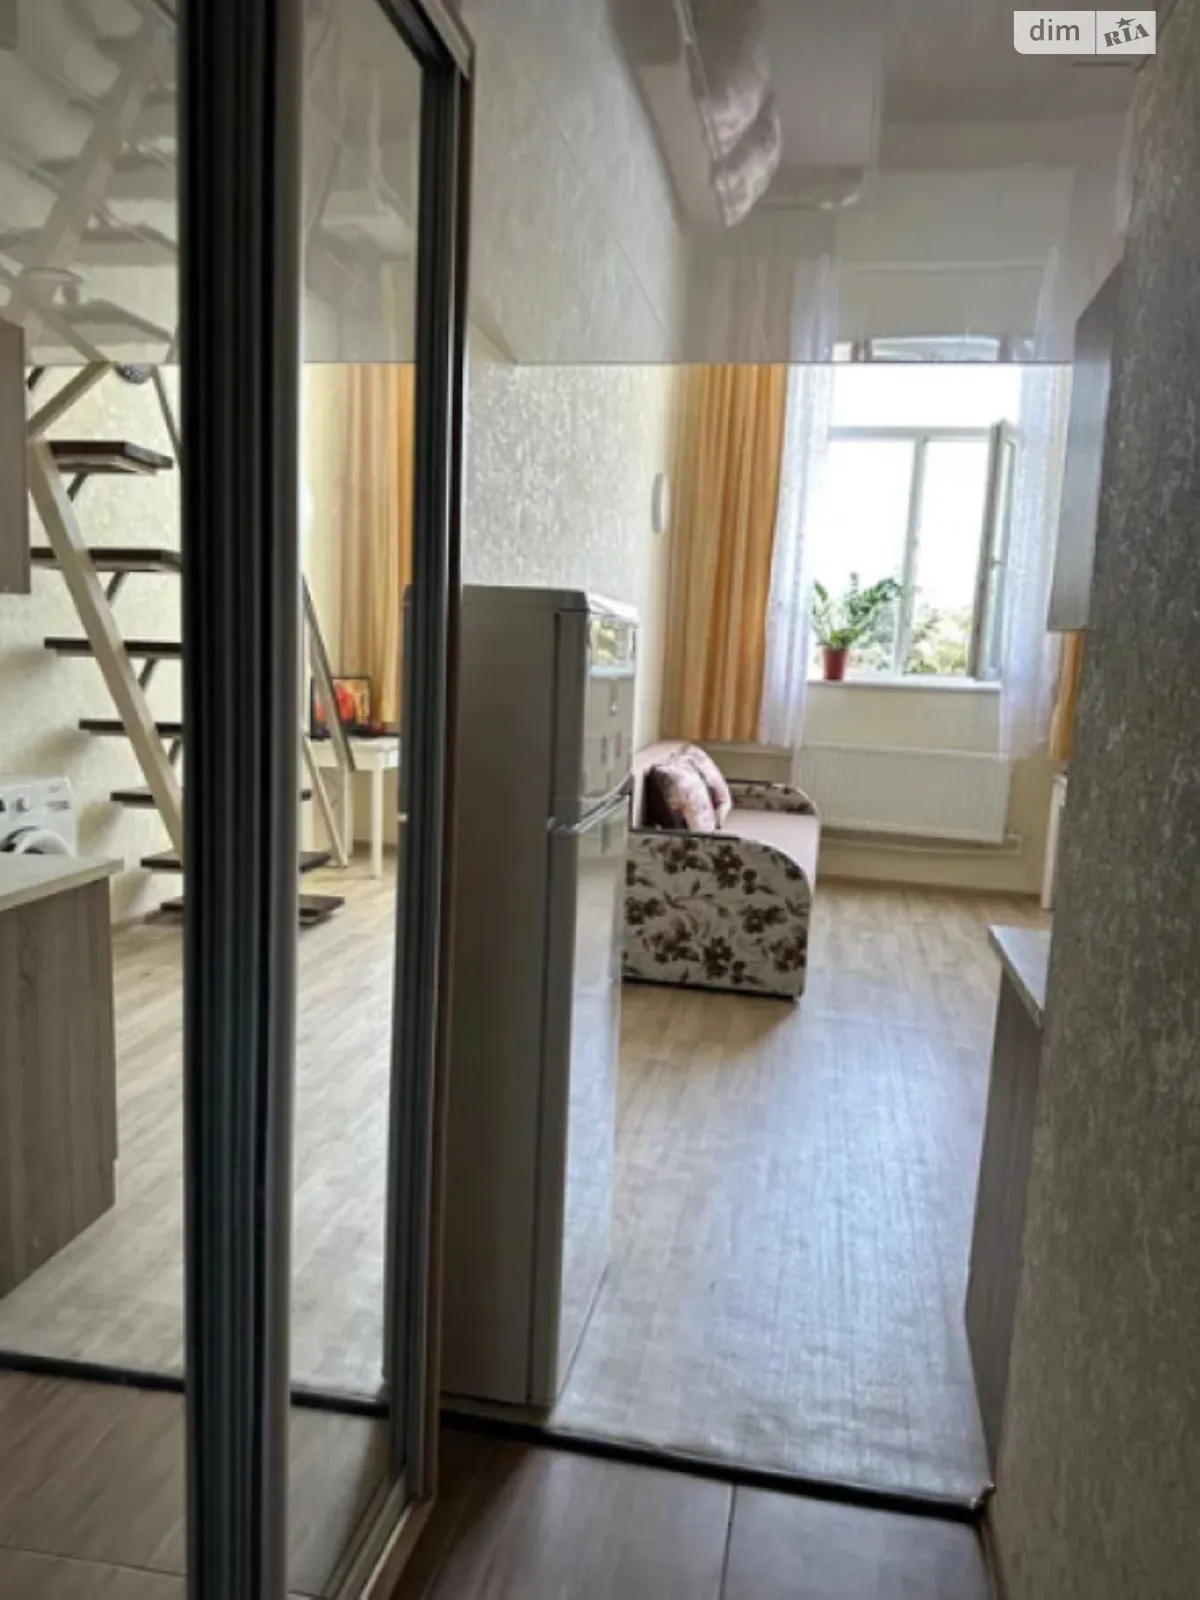 Продается комната 28 кв. м в Харькове - фото 2